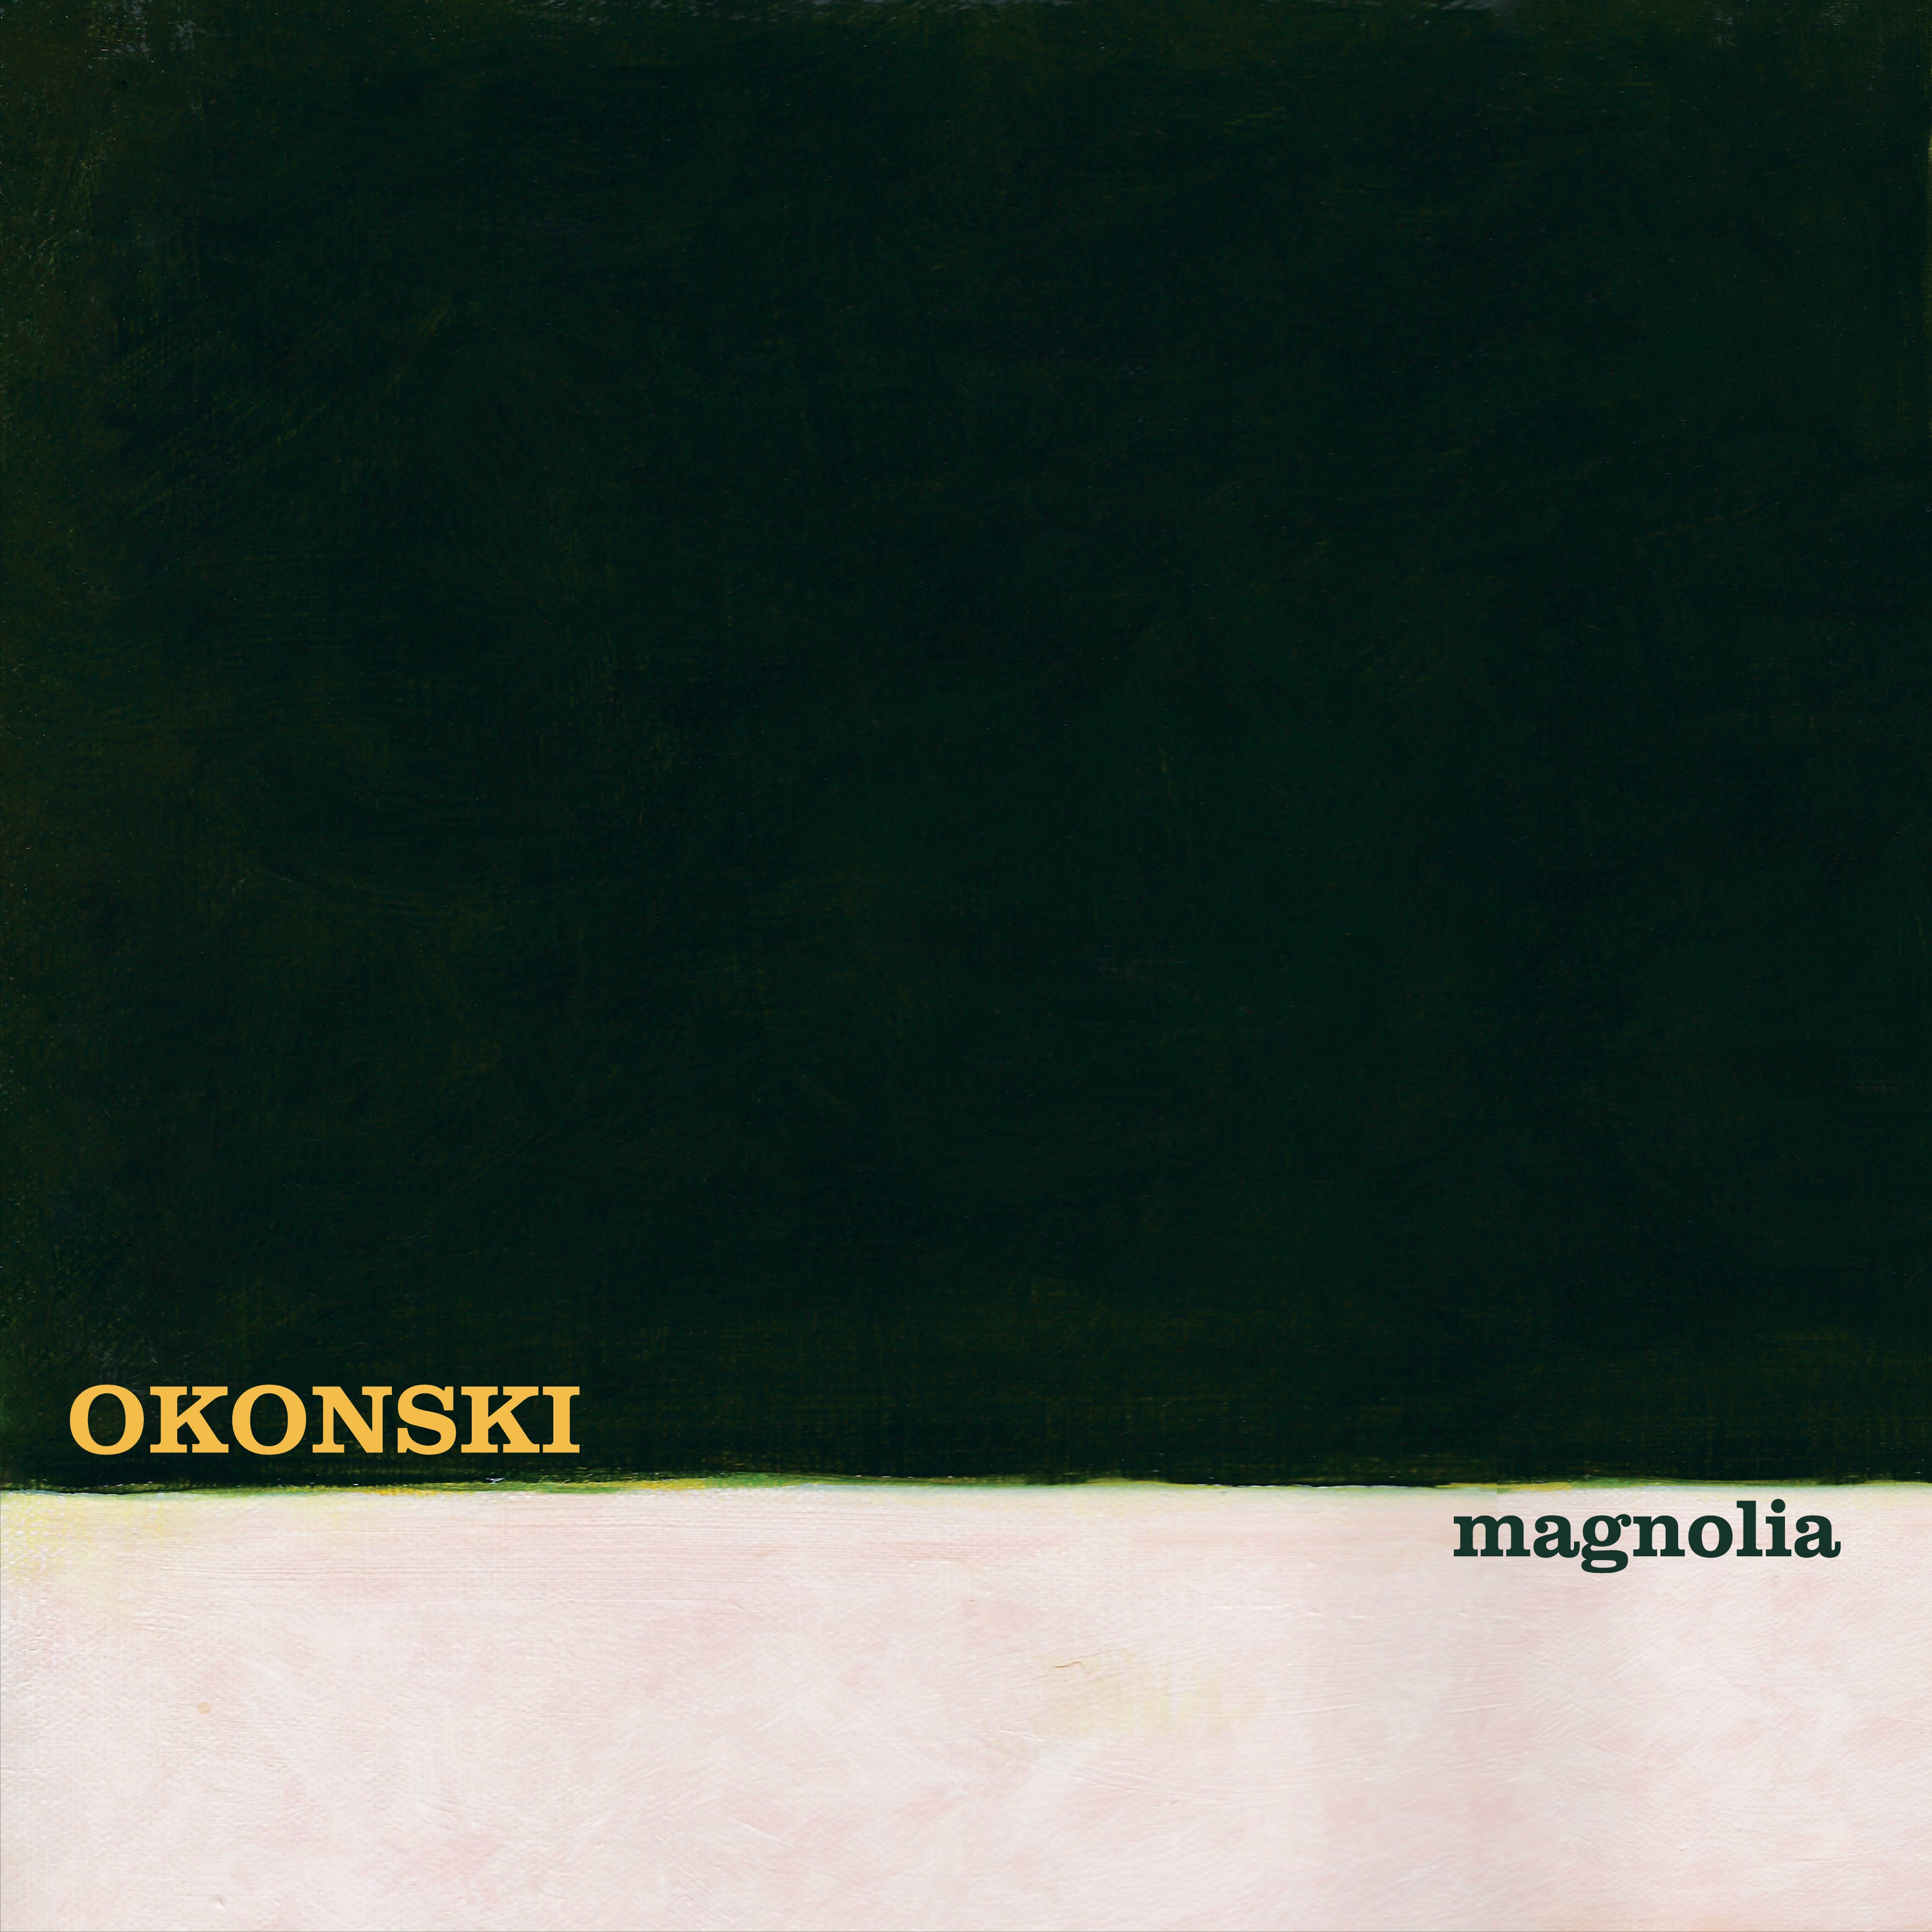 [DAMAGED] Okonski - Magnolia [Black Vinyl]